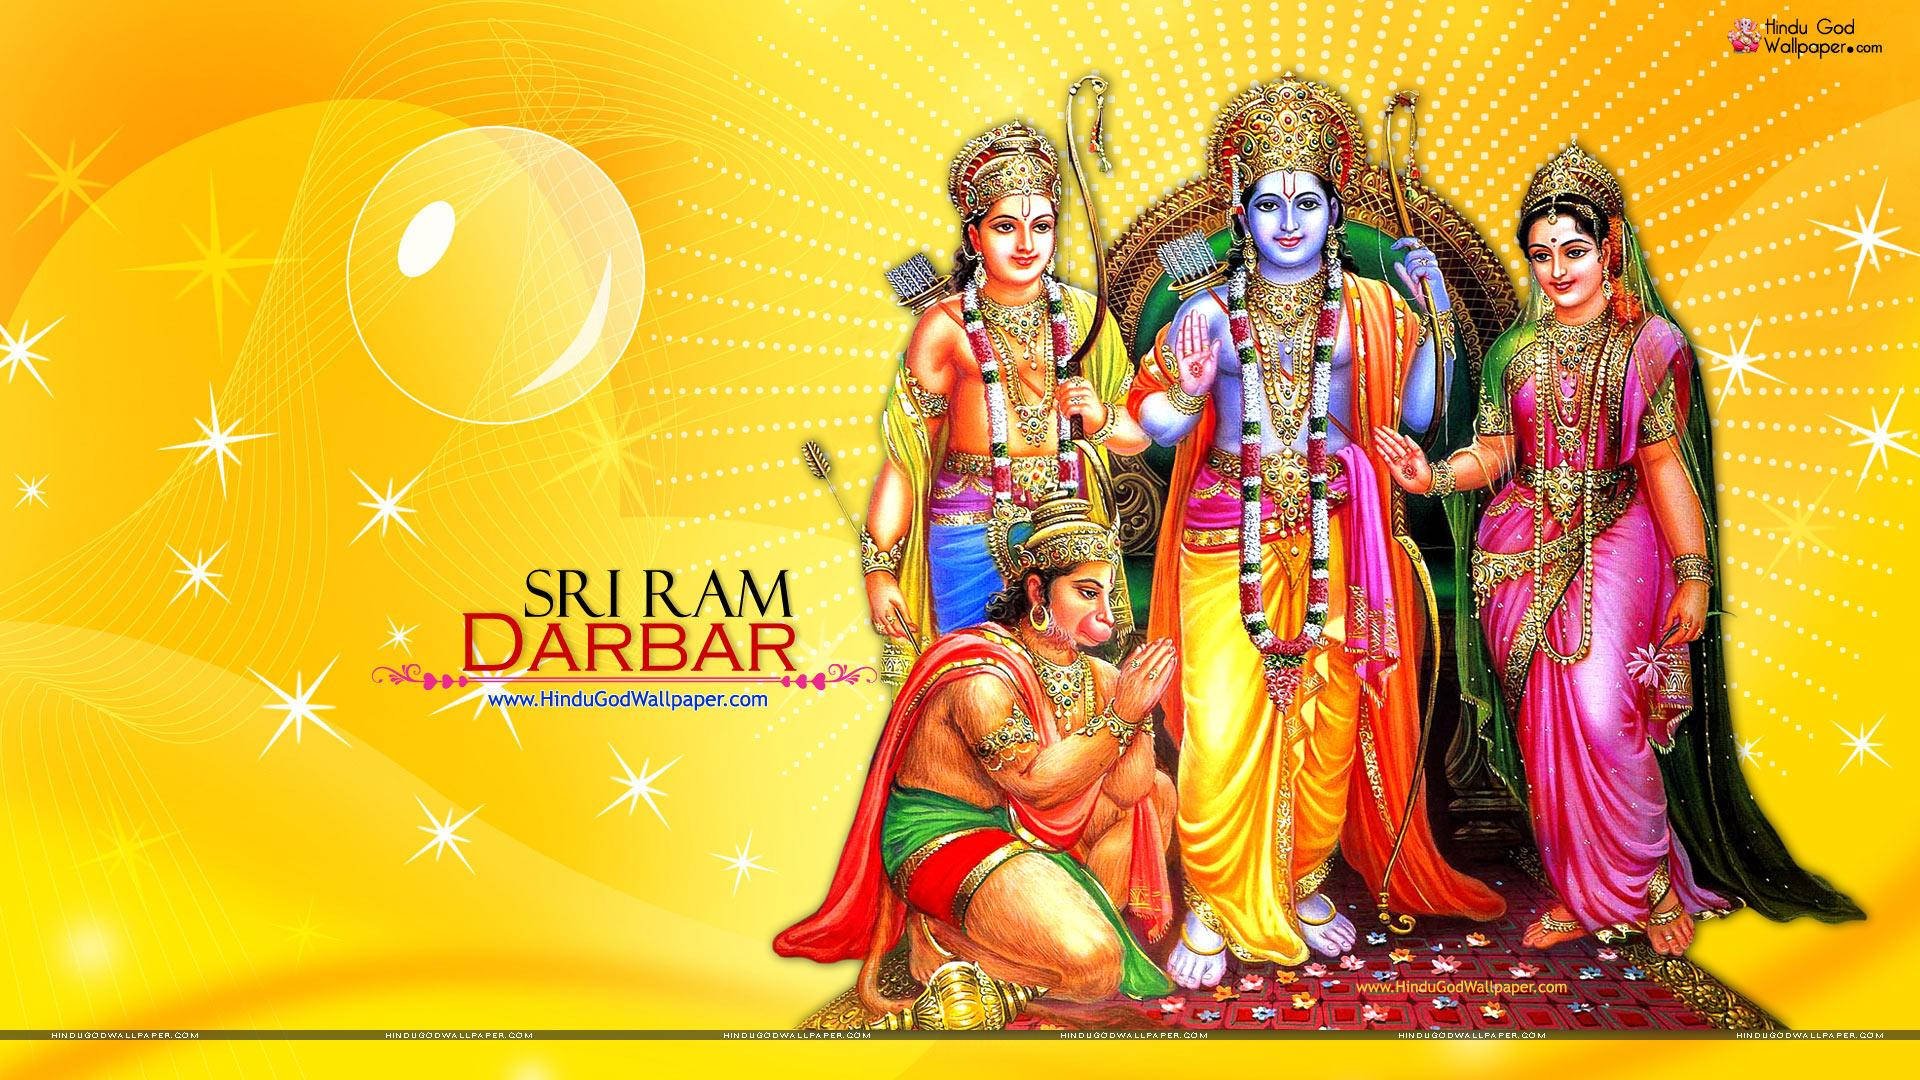 Free Ram Darbar Wallpaper Downloads, [100+] Ram Darbar Wallpapers for FREE  